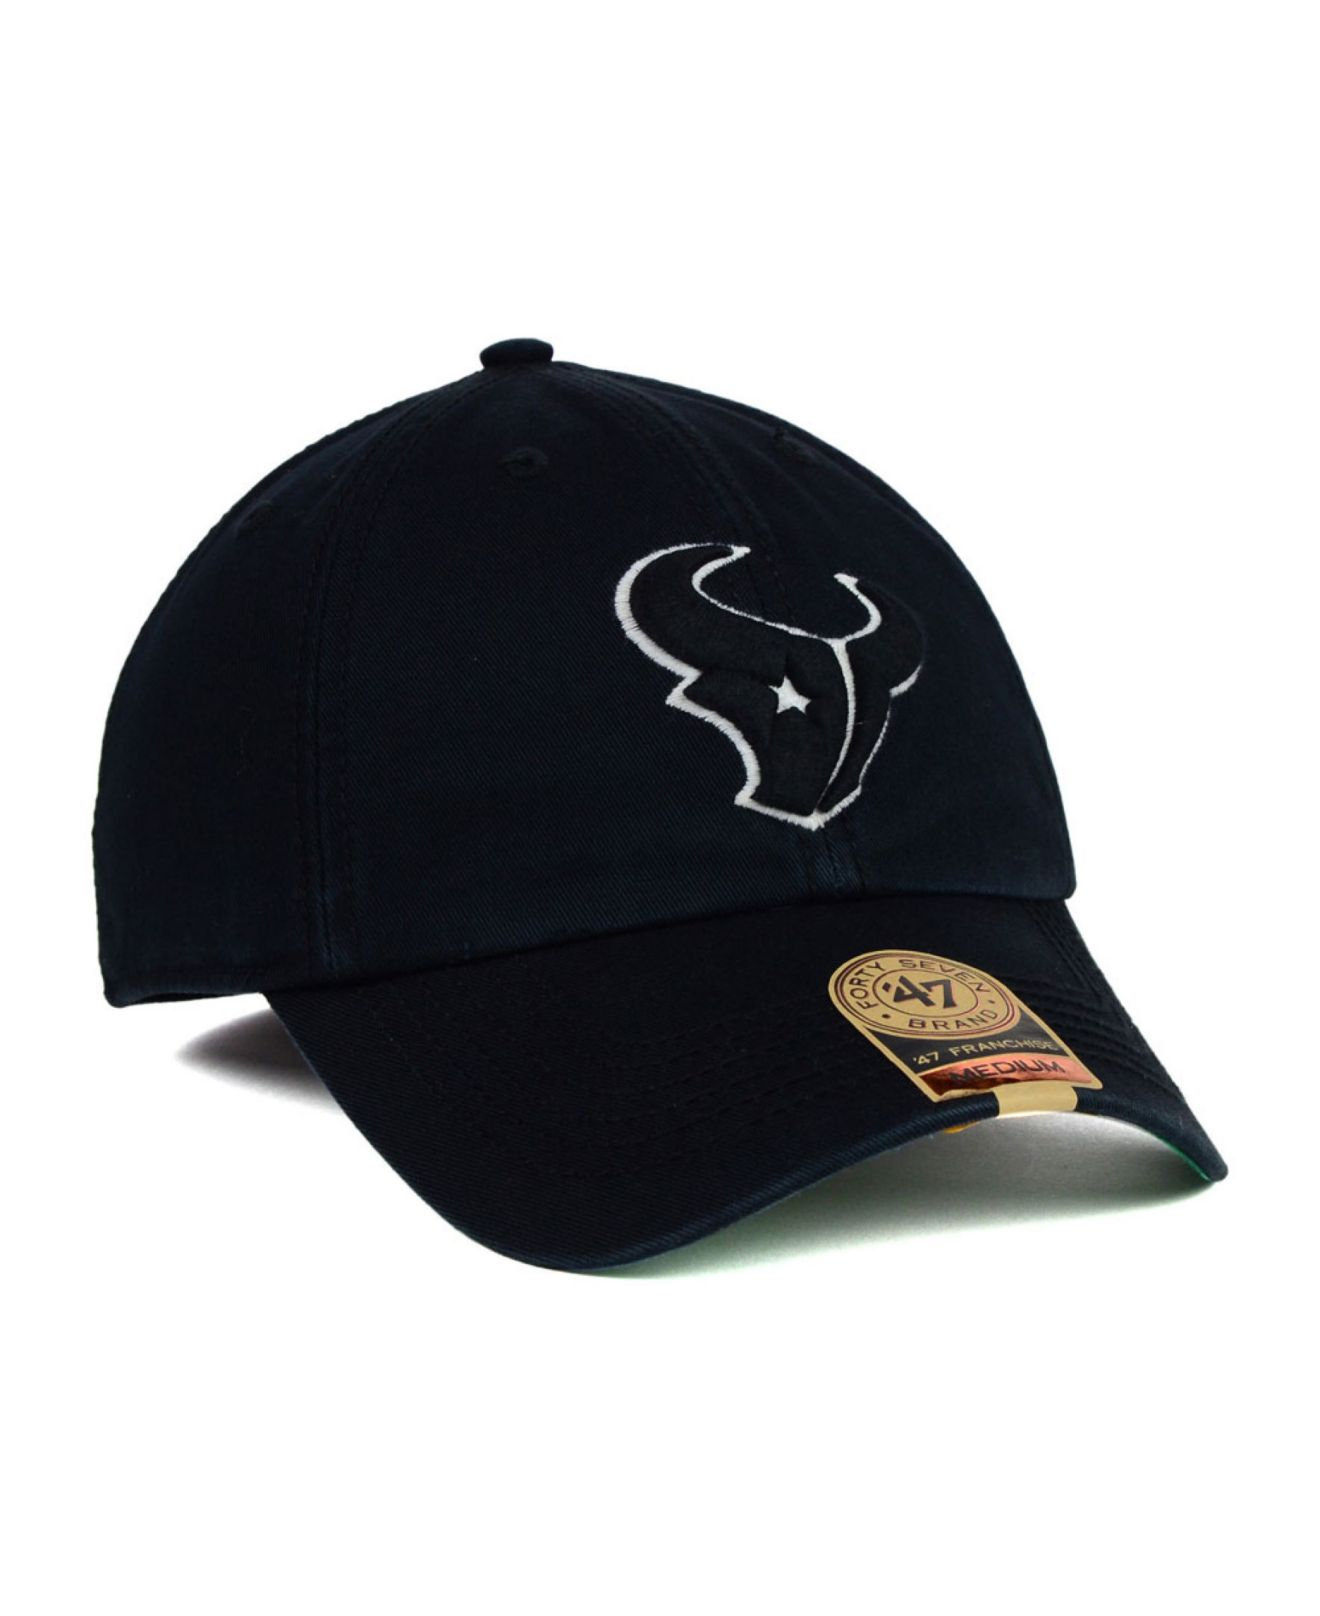 black texans hat